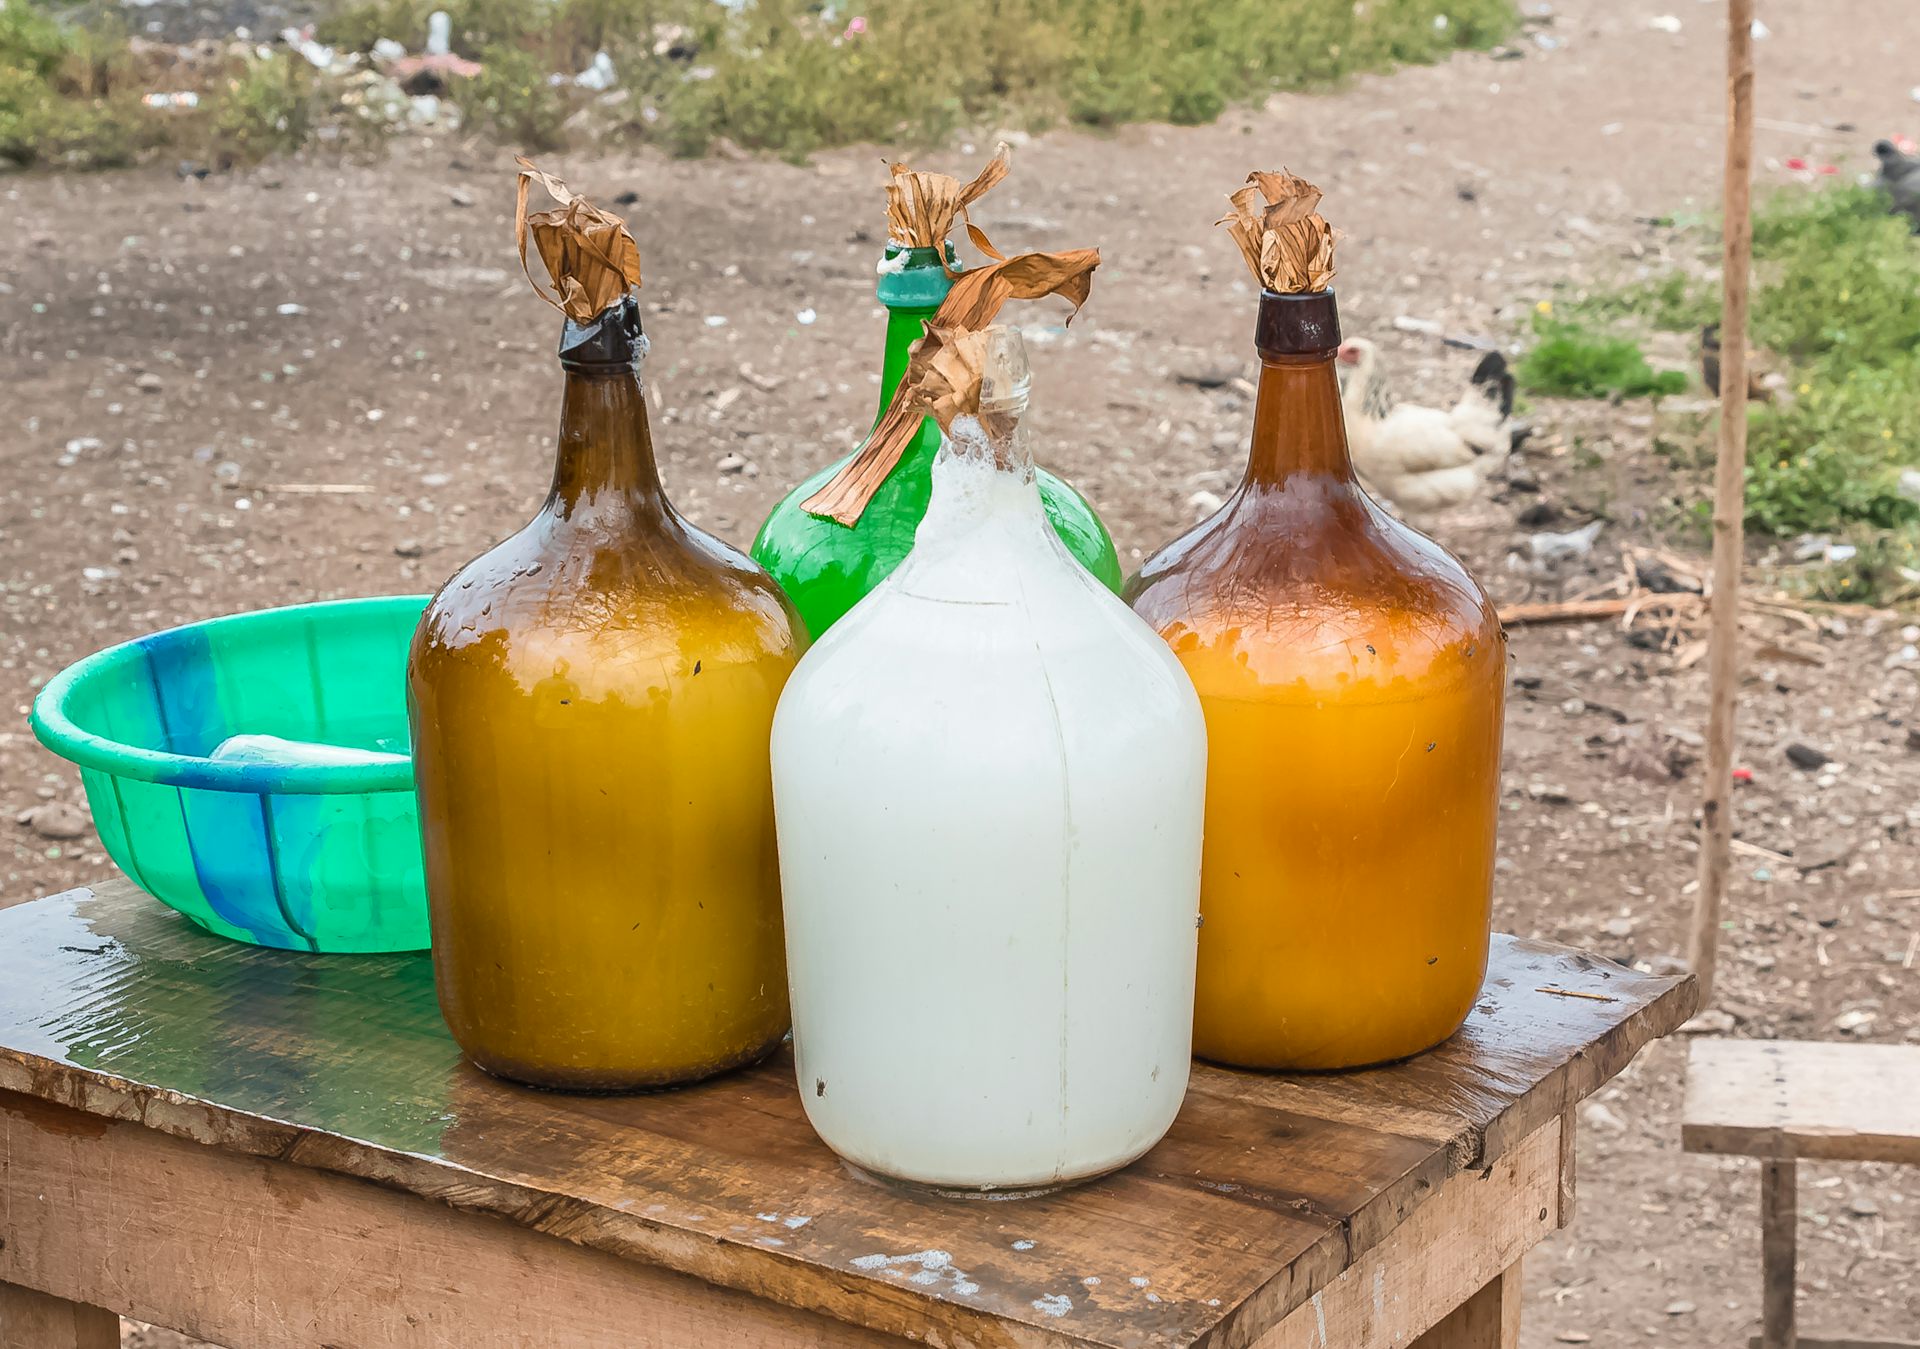 The Role of Rural Women in Making Home Brew: a Rwandan Case Study